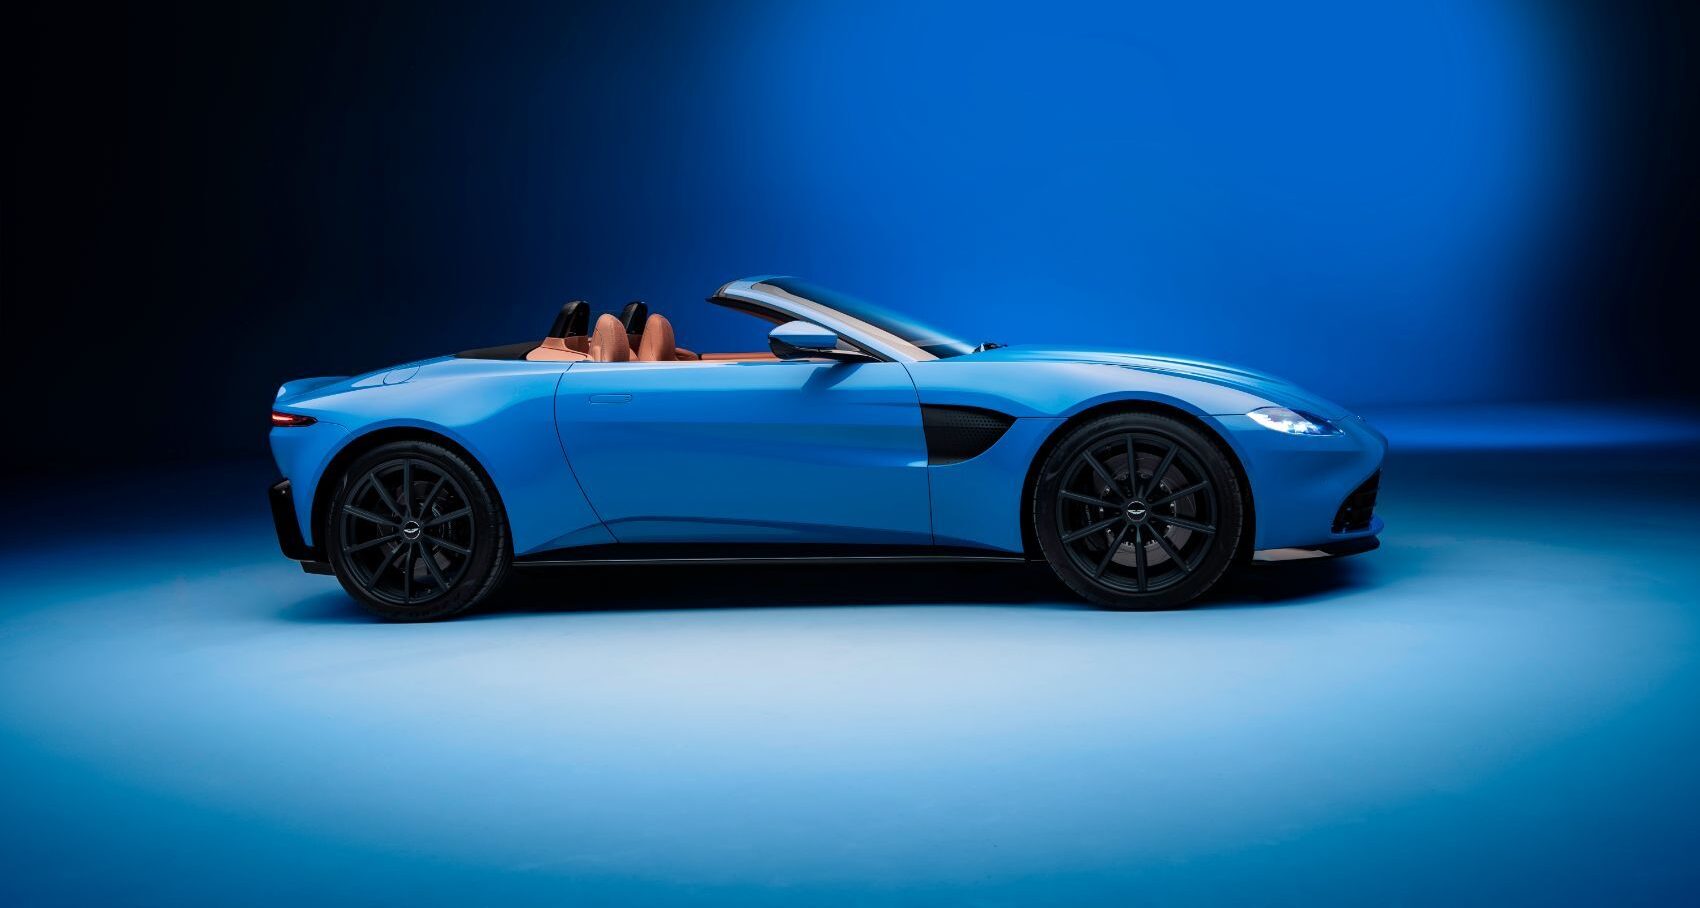 Aston Martin Vantage Roadster: This Drop Top Looks Really Fun!